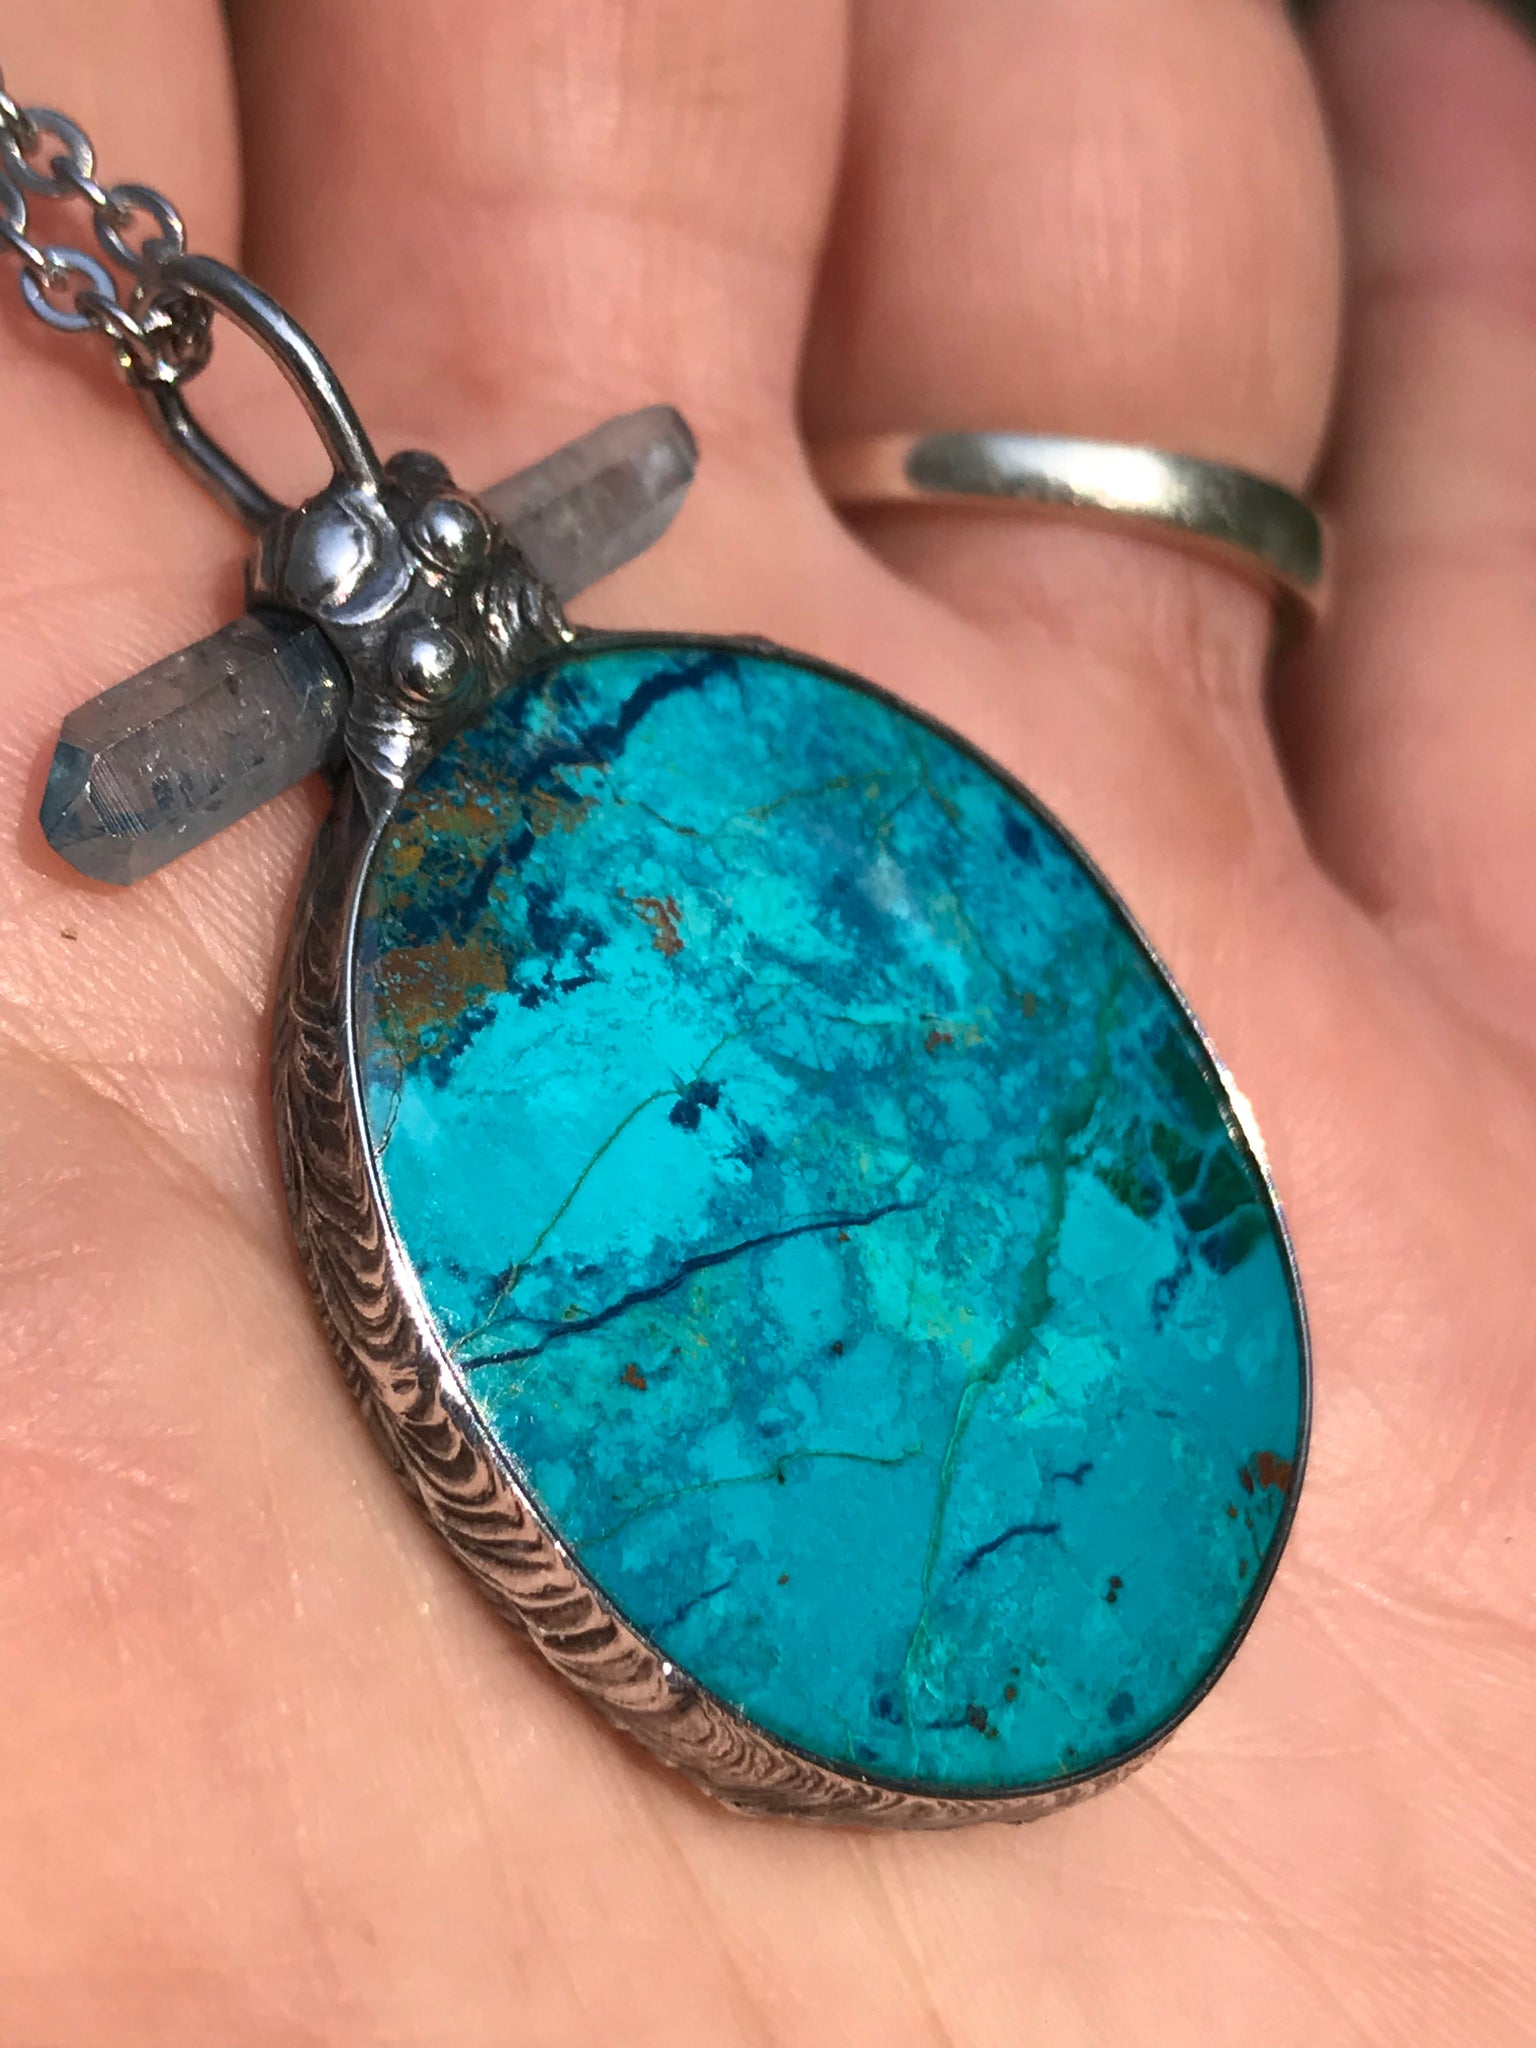 Aqua Aura and ocean blue Chrysocolla pendant